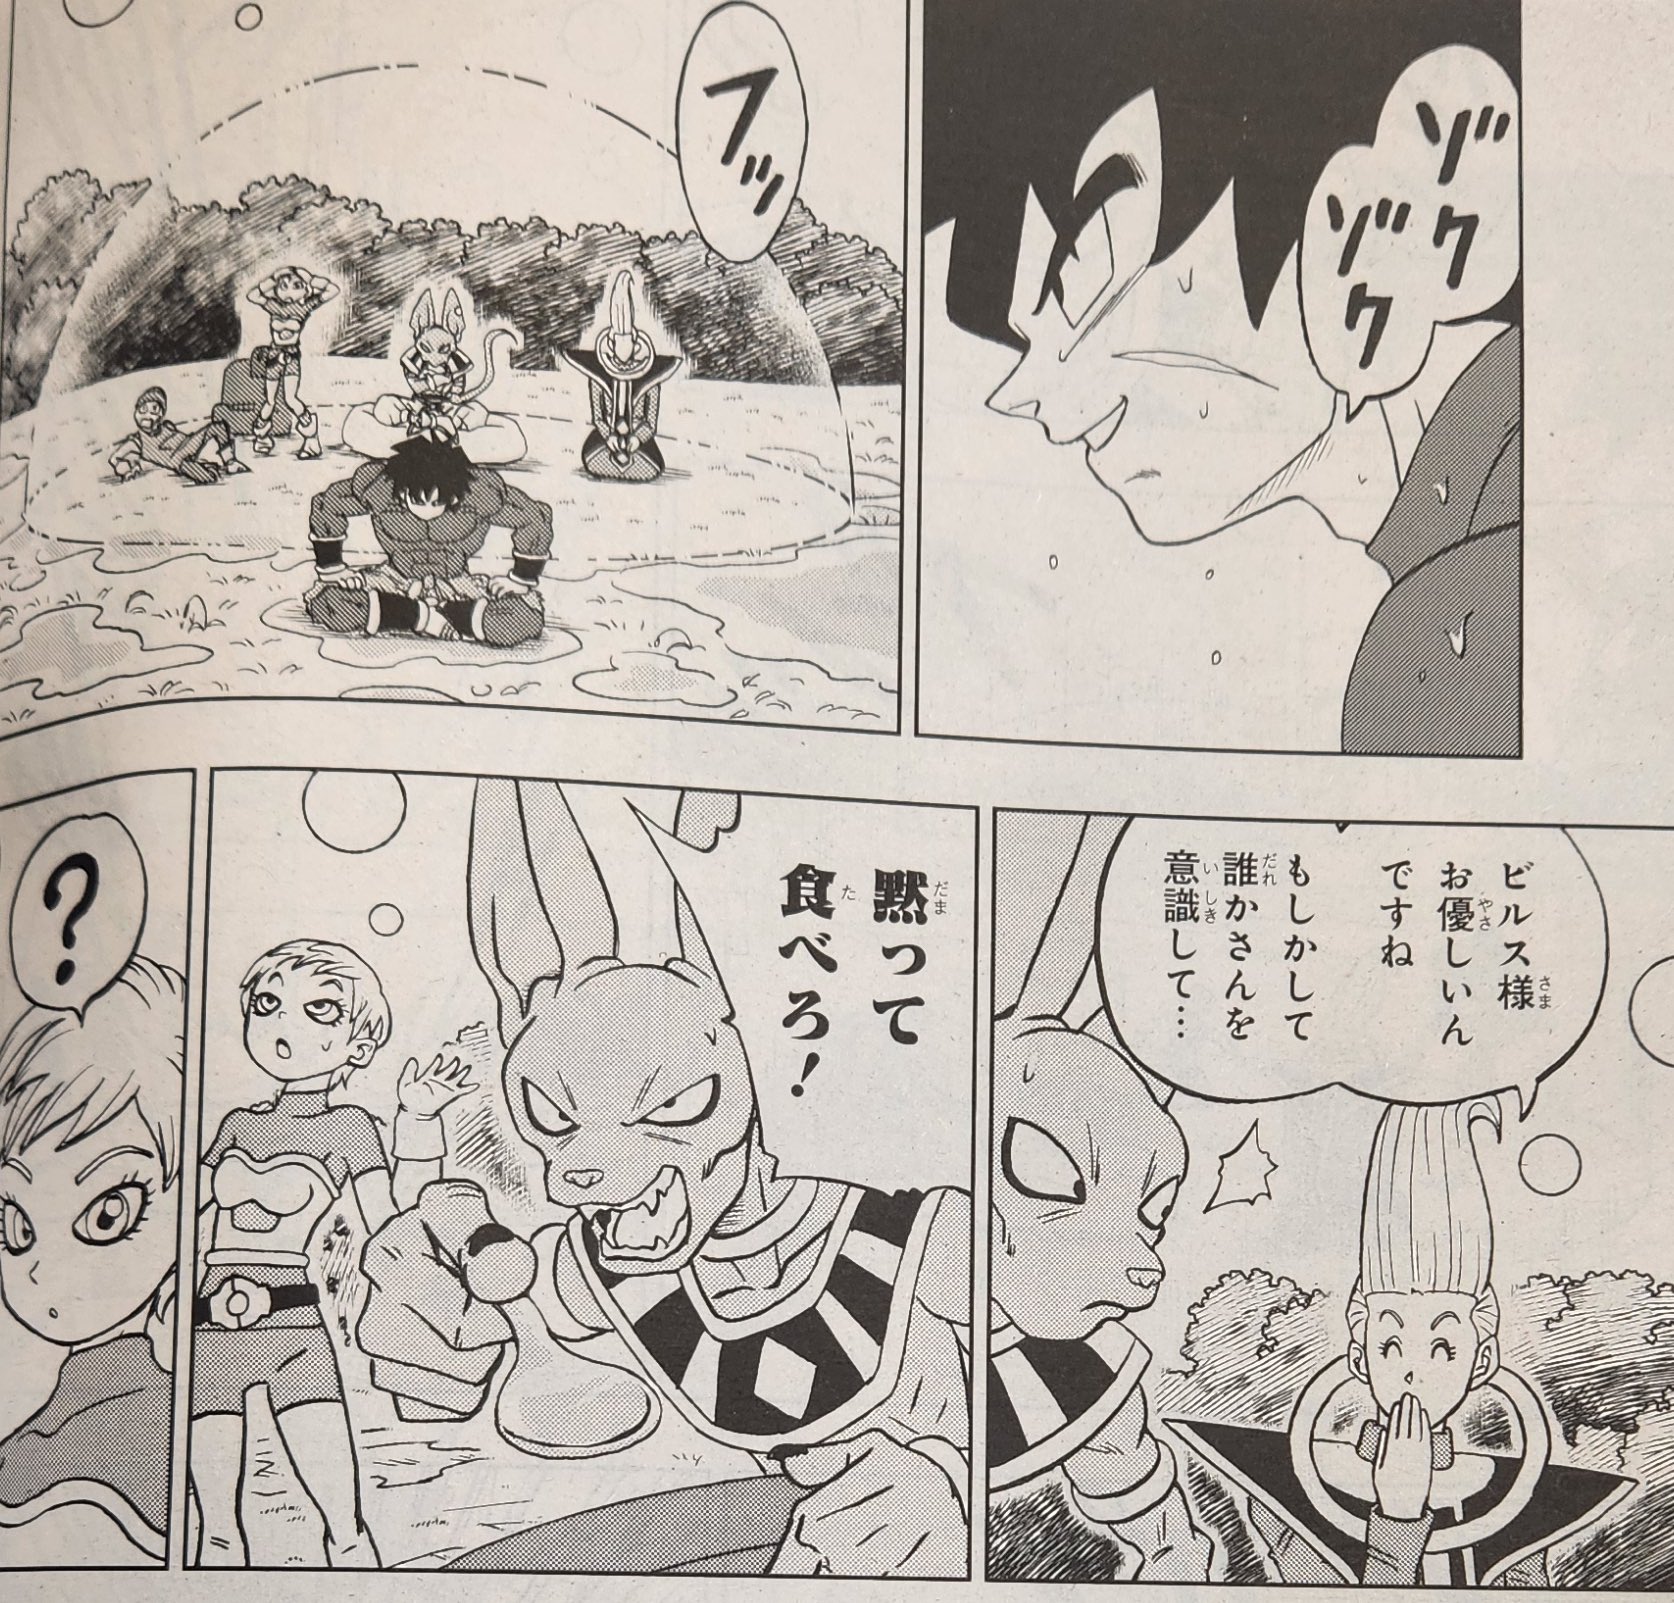 Goku Vs Vegeta! - Capítulo 93 DBS!! 